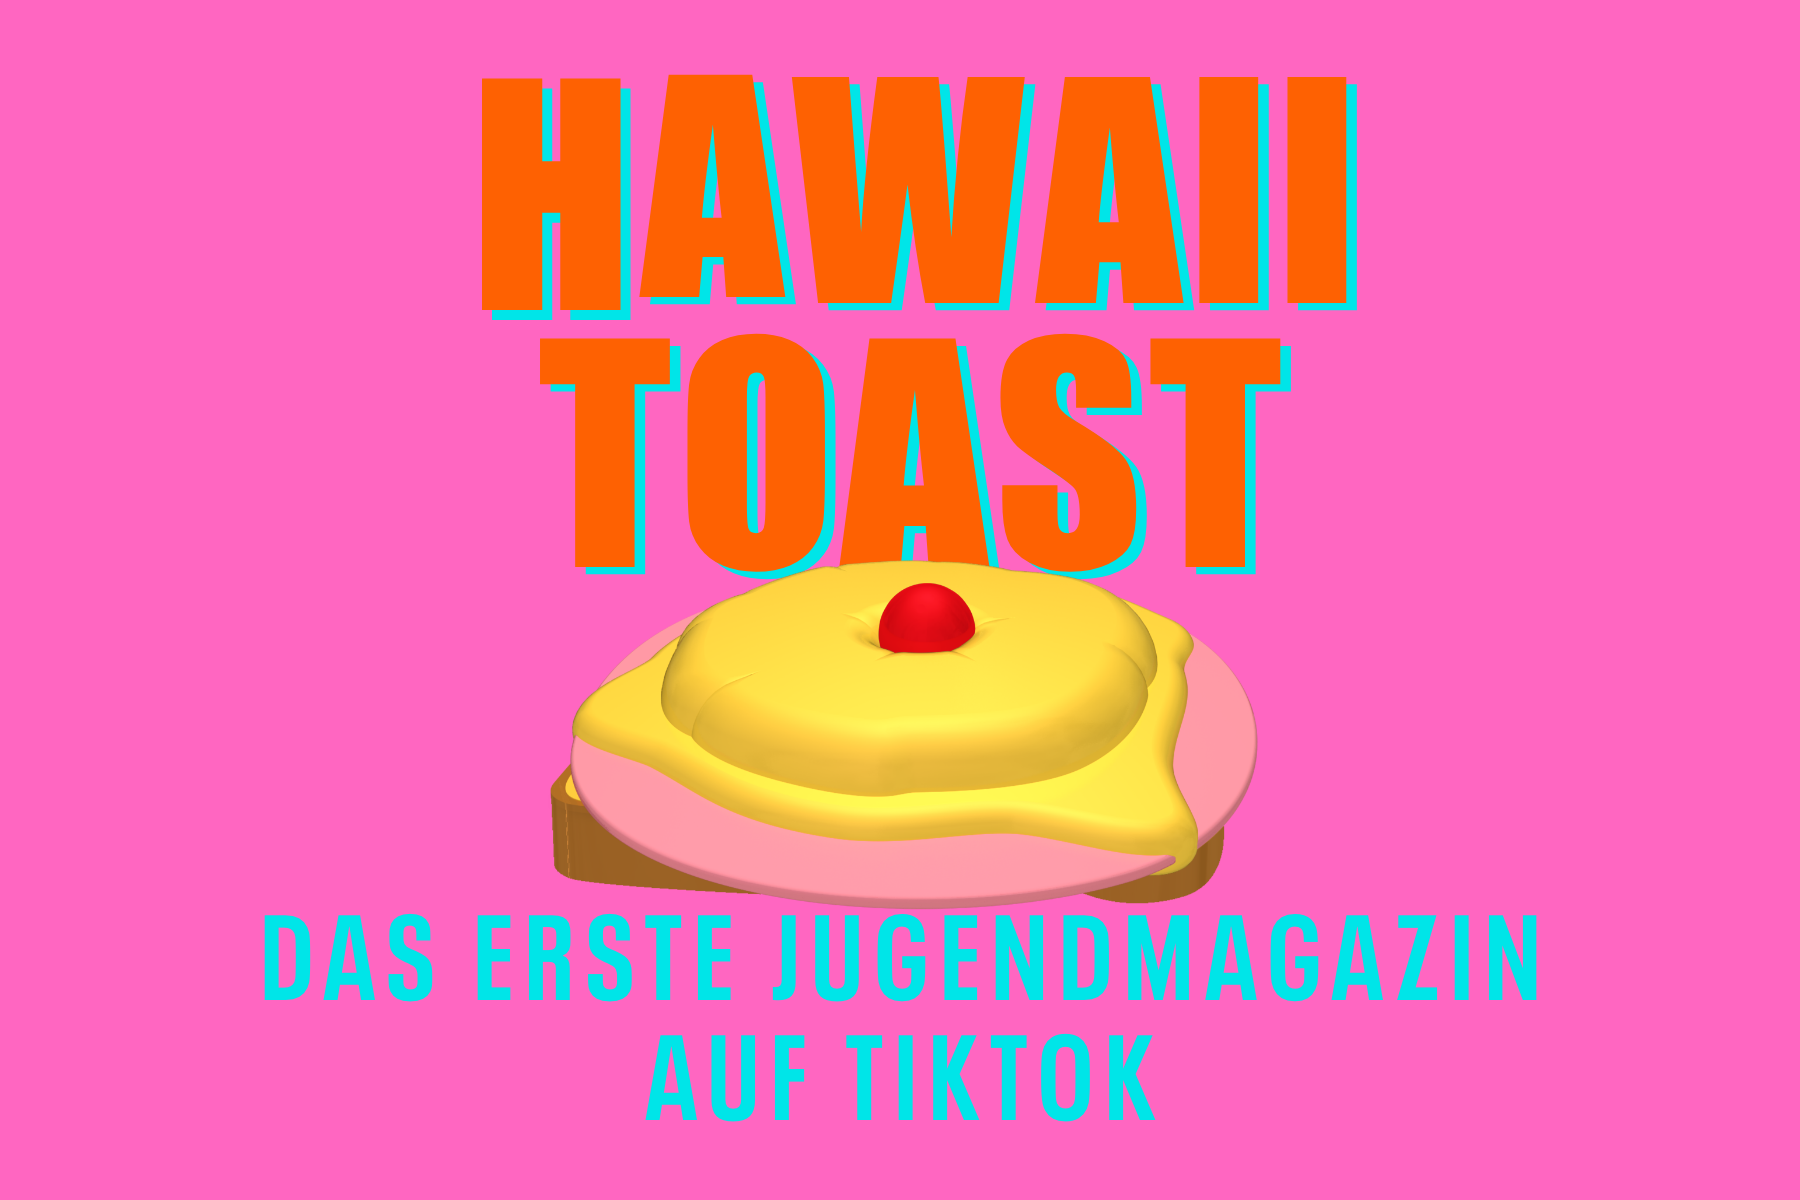 (c) Hawaiitoast.com